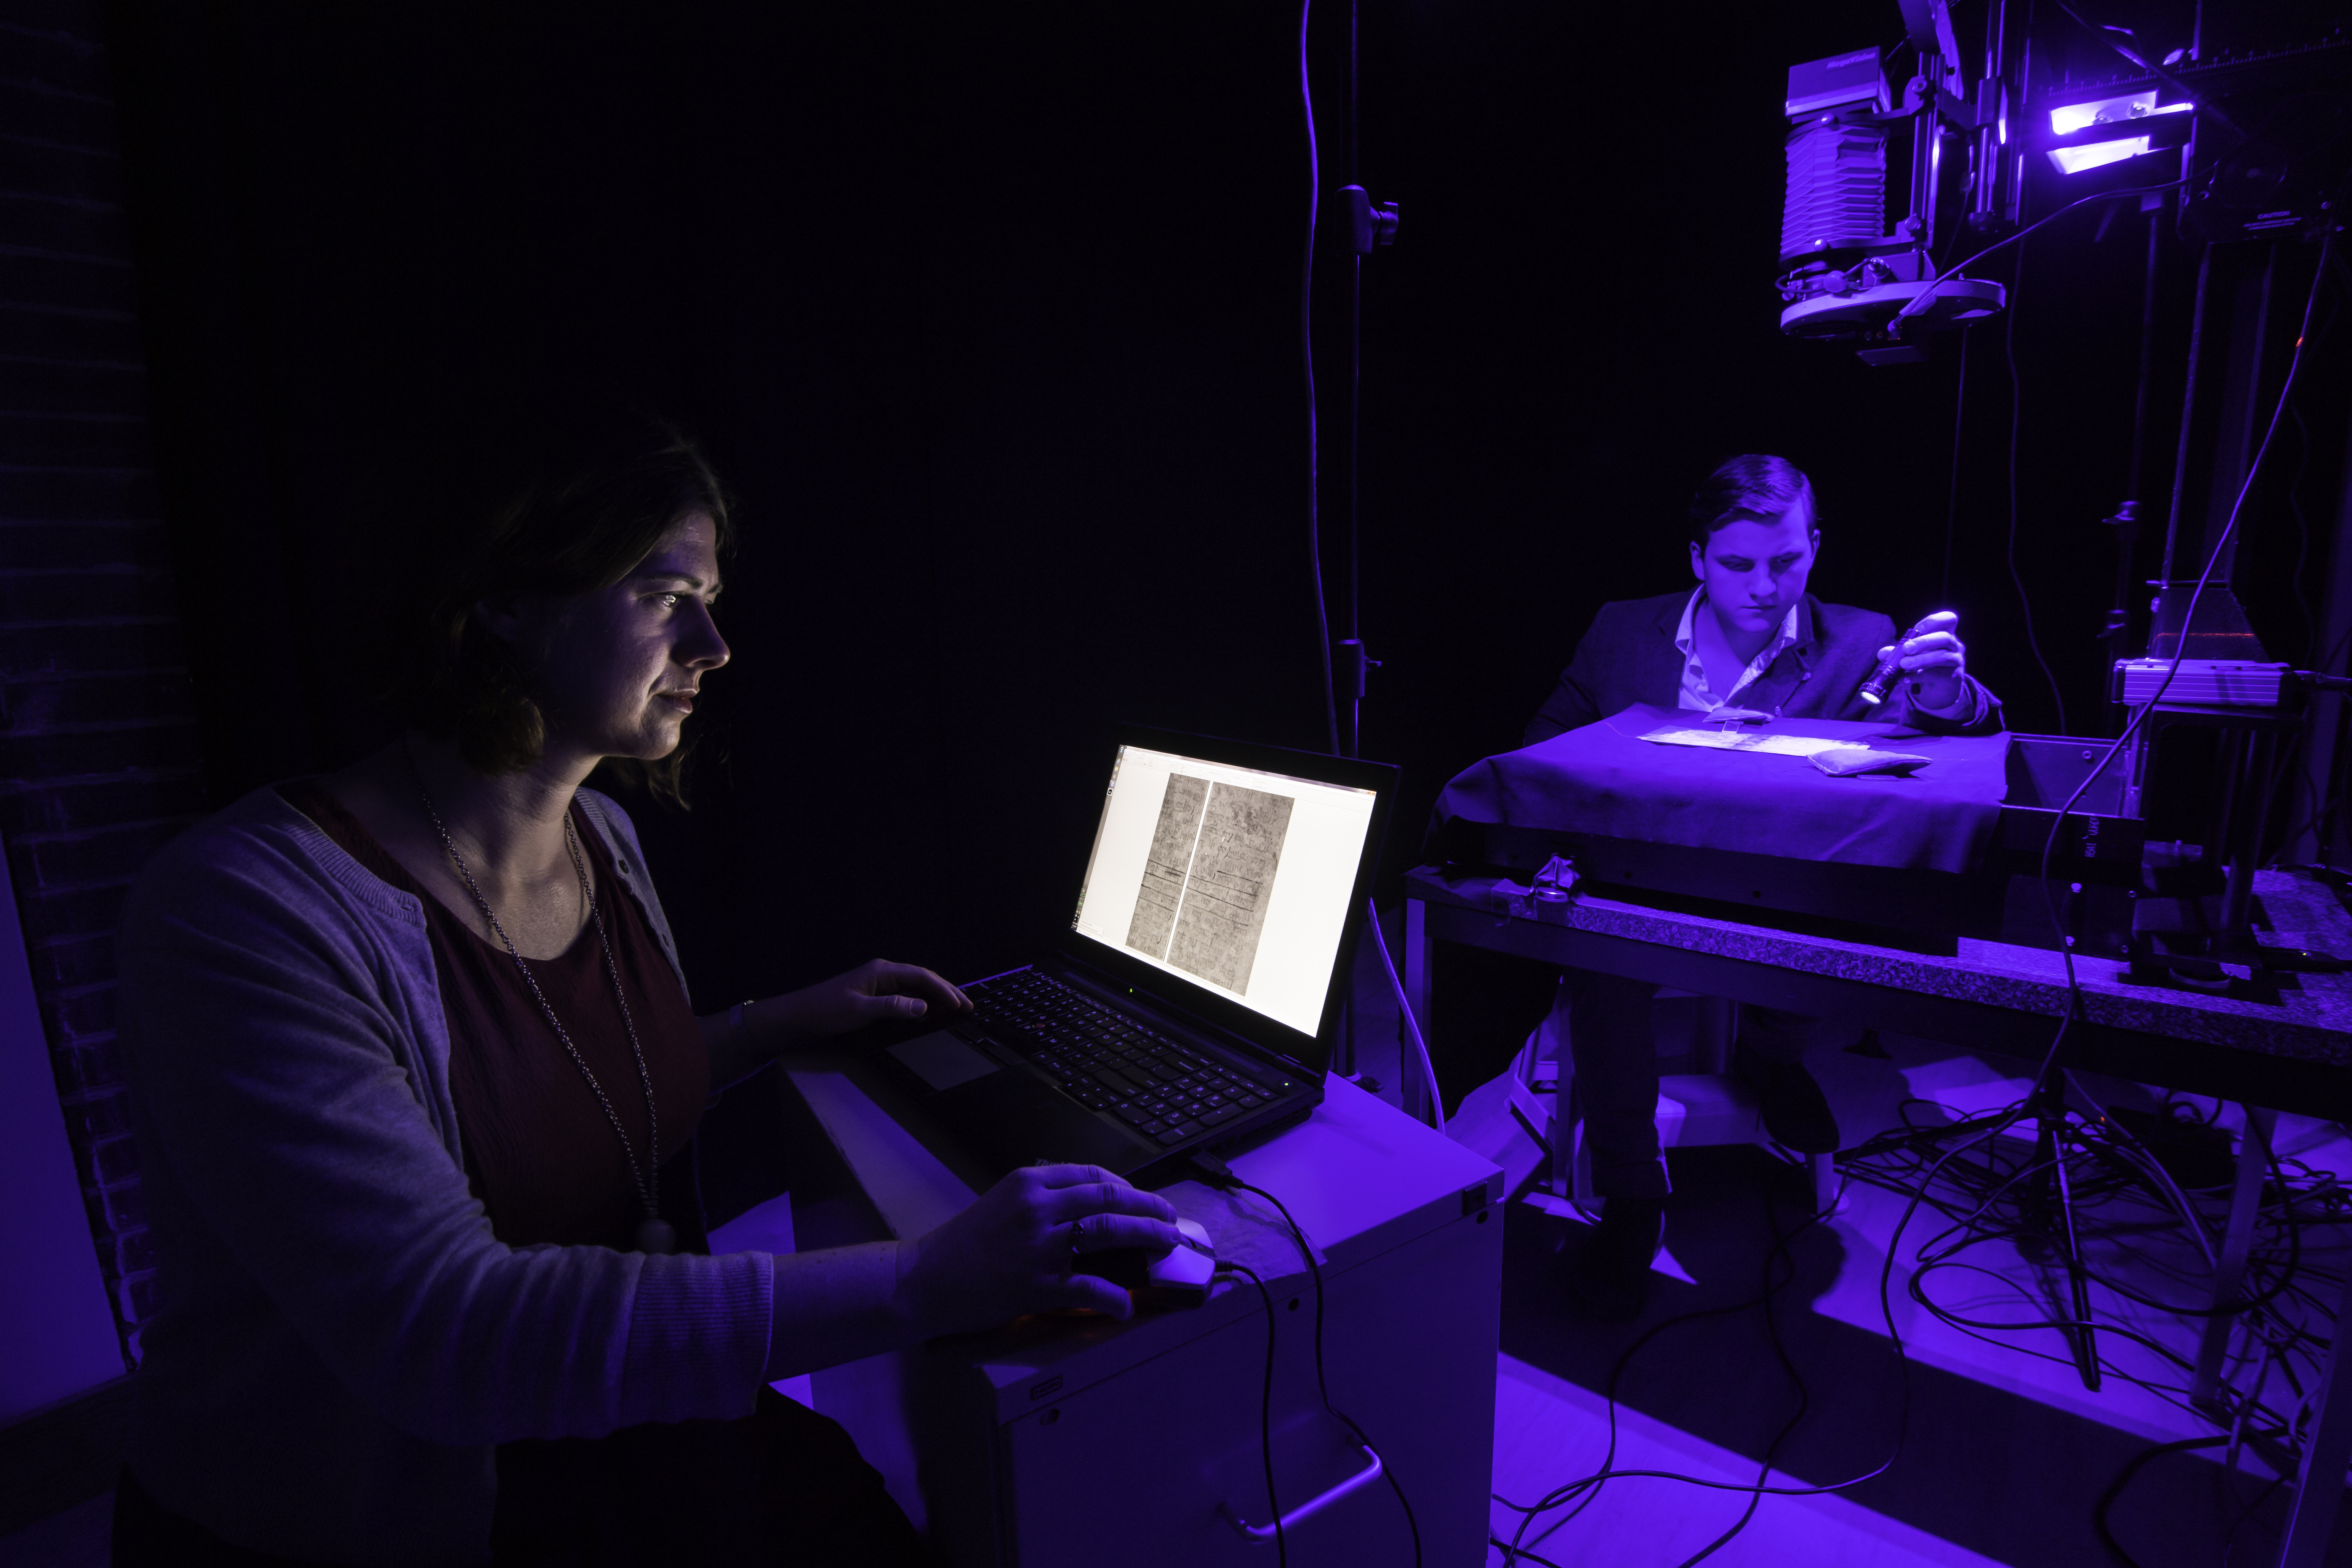 NEXT GENERATION: Heyworth’s students Helen Davies (left) and Alex Zawacki examine a manuscript under blue light. (University photo / J. Adam Fenster)